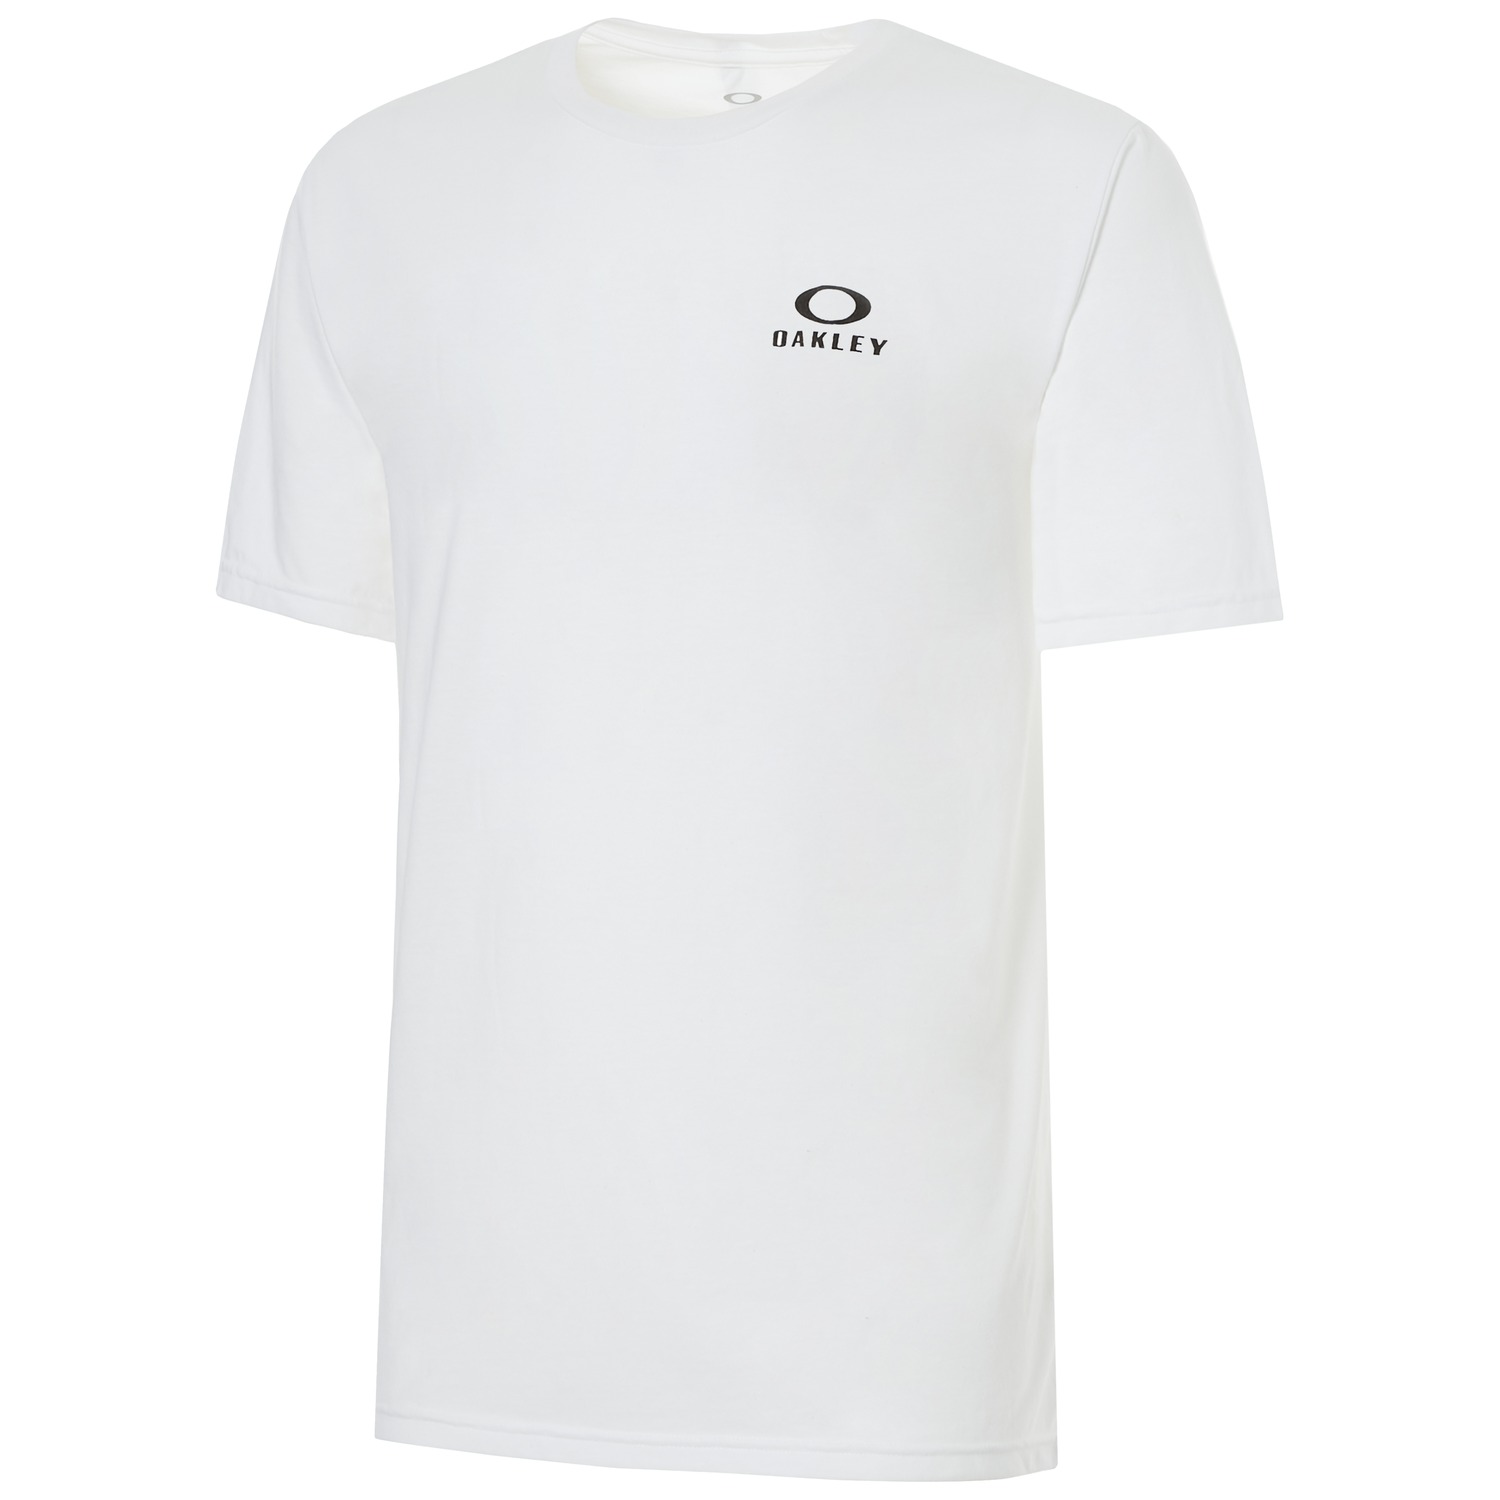 Oakley T-Shirt 50 Bark Repeat Weiß